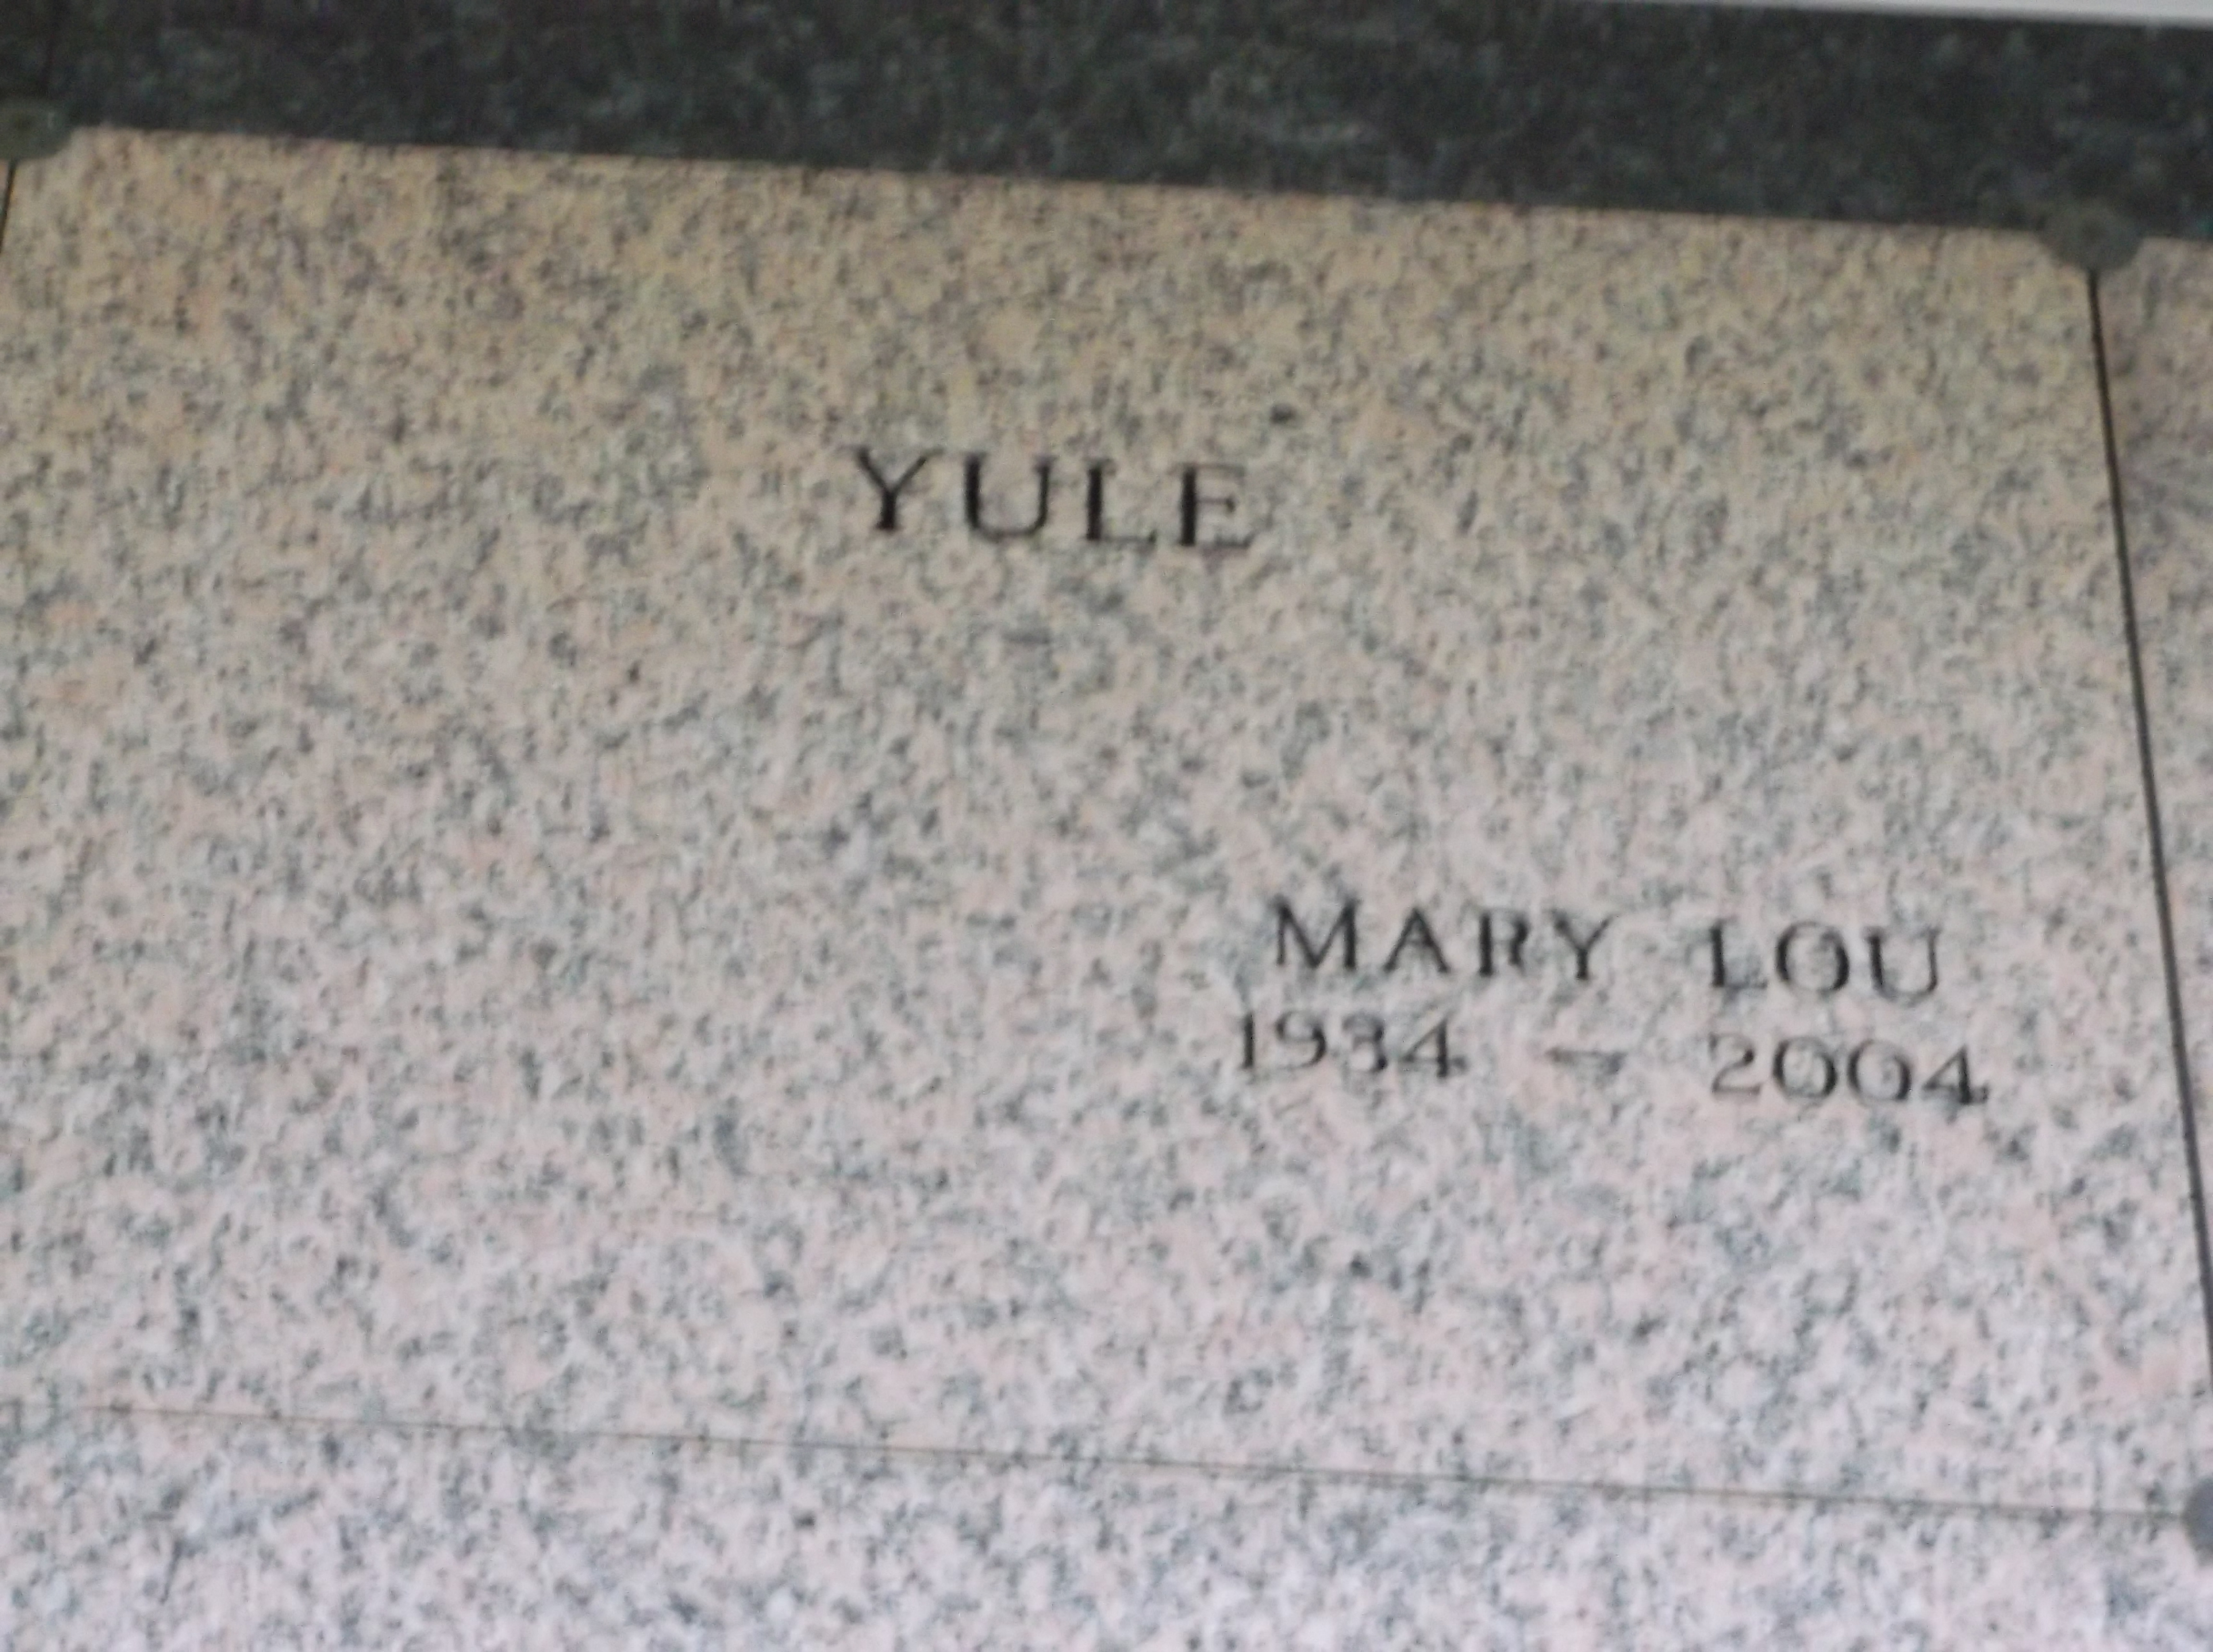 Mary Lou Yule